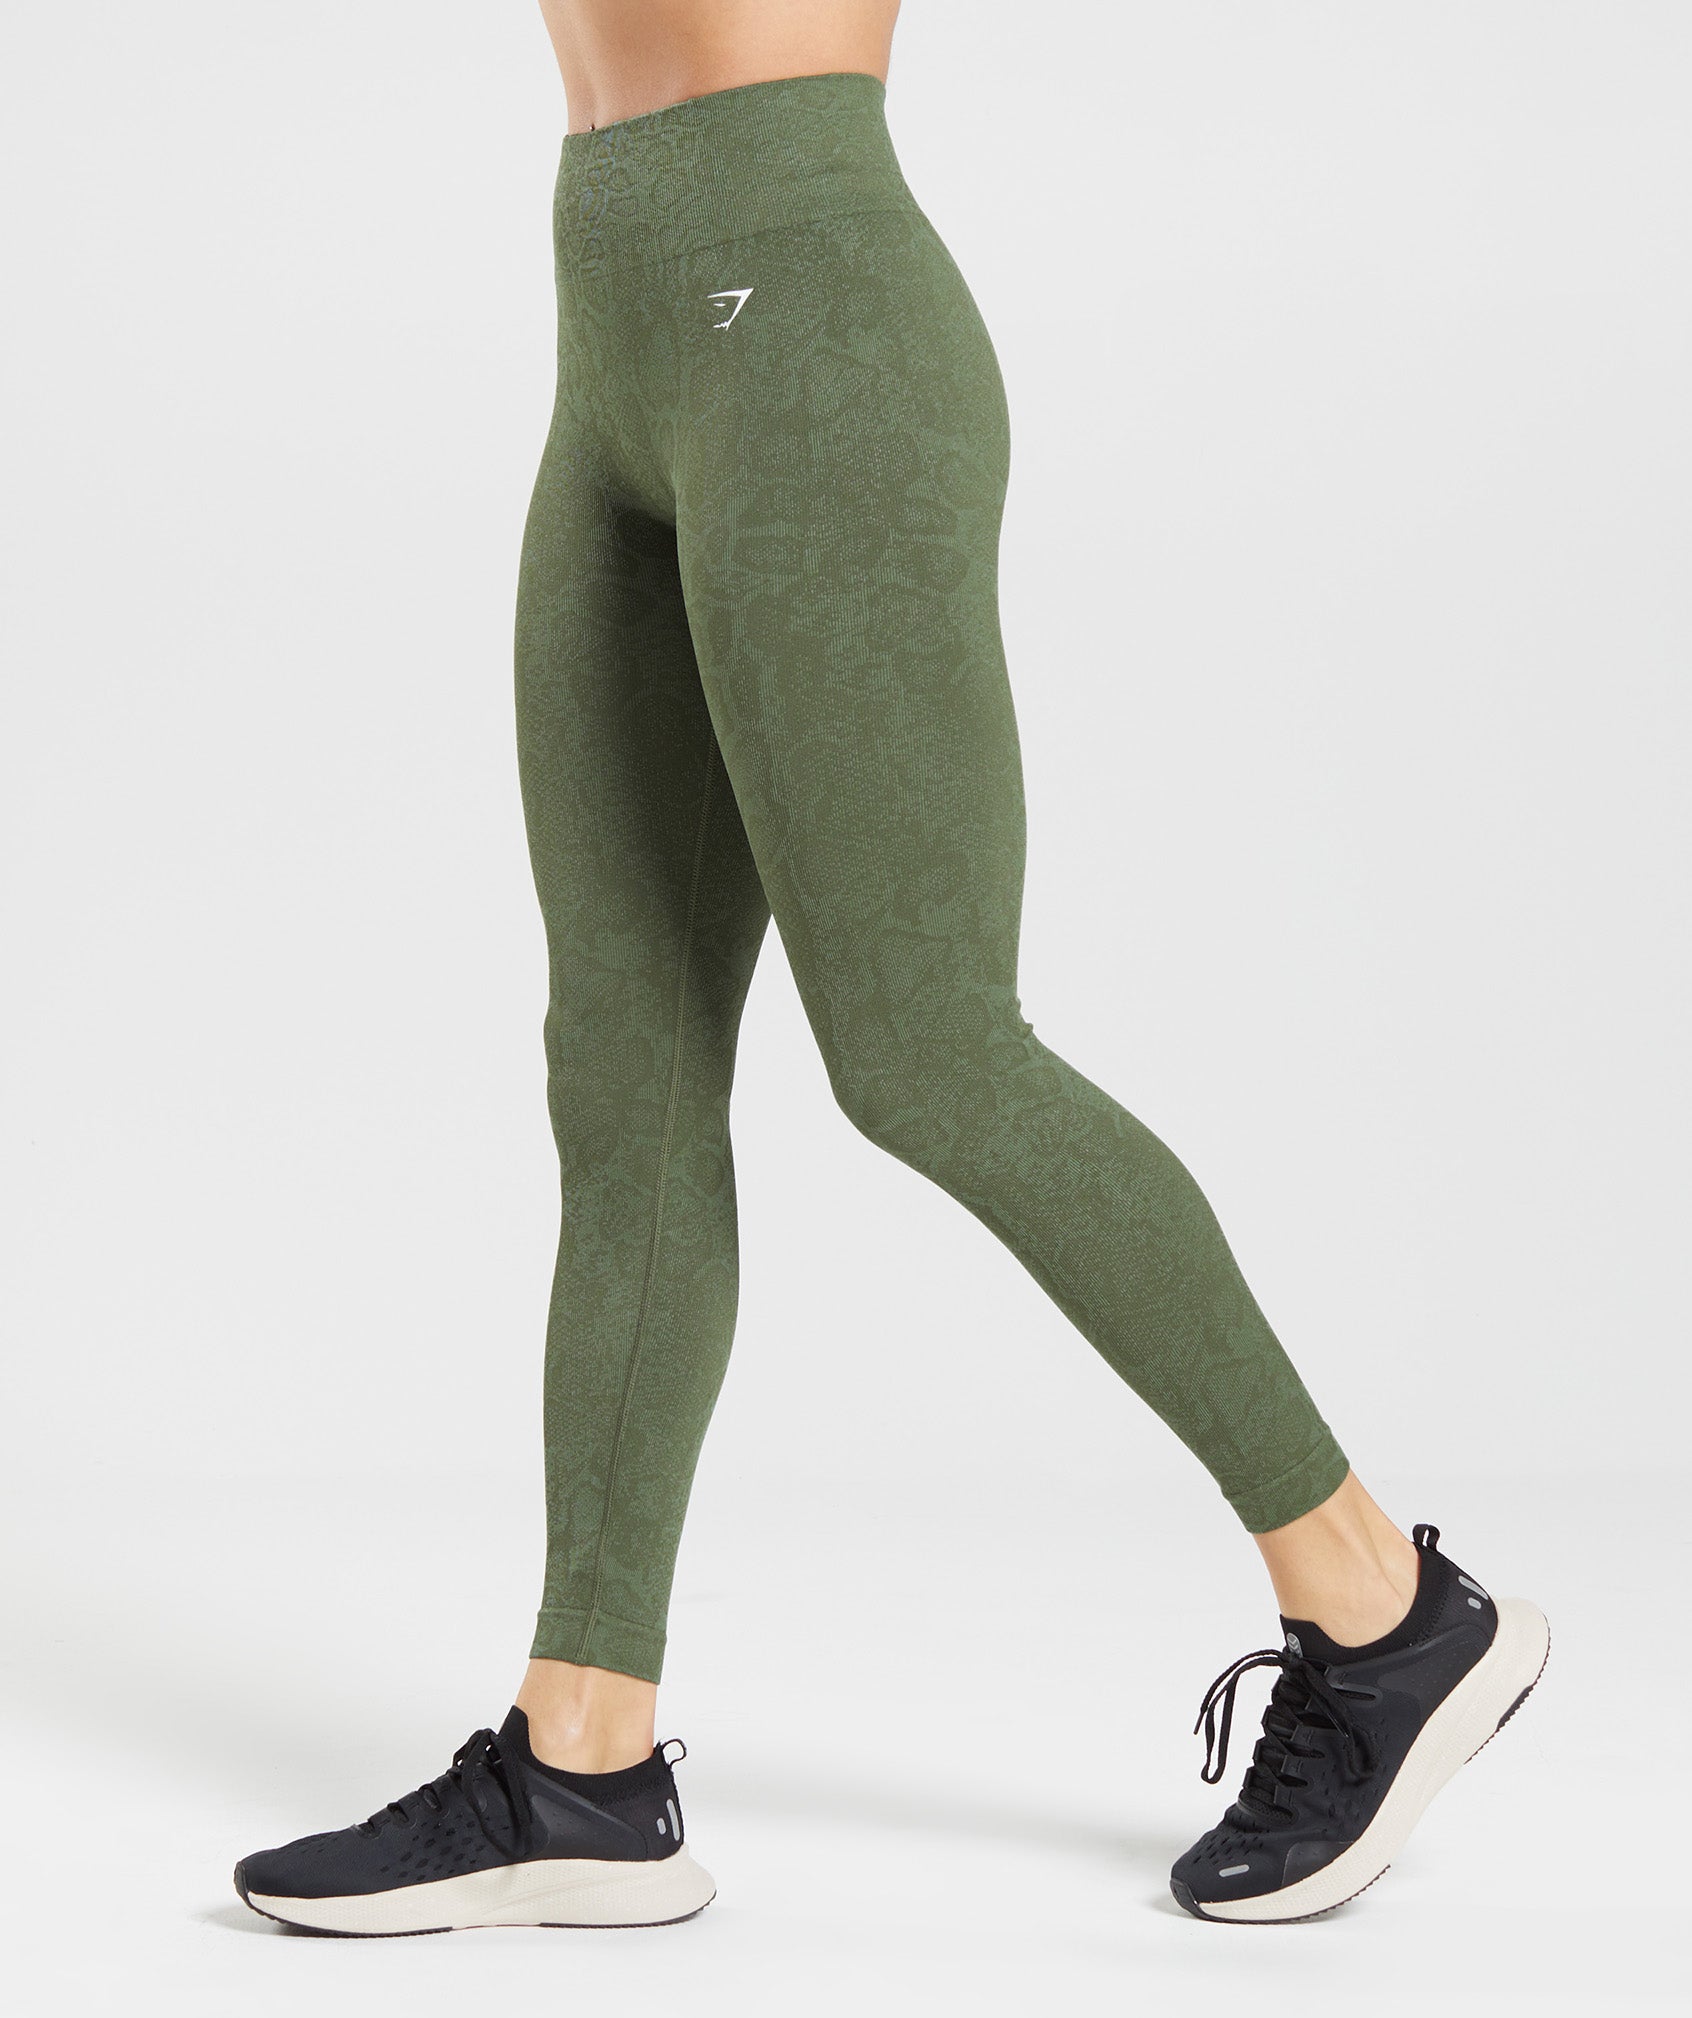 Gymshark Adapt Camo Seamless Patterned Leggings, Aqua Green, Small  [Variation] : : Fashion